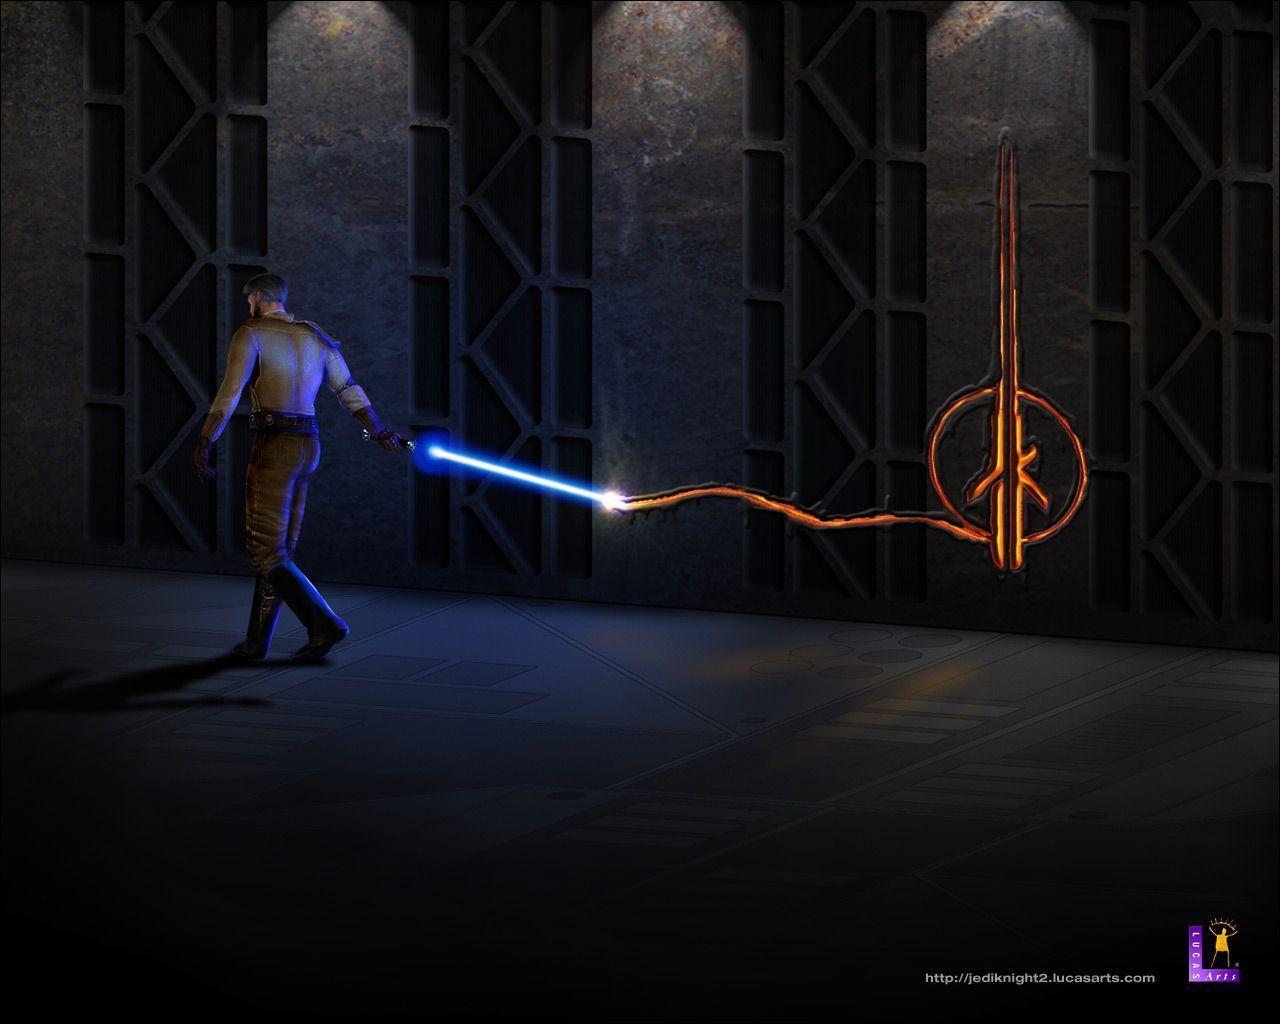 Star Wars JK 2 Wallpaper image